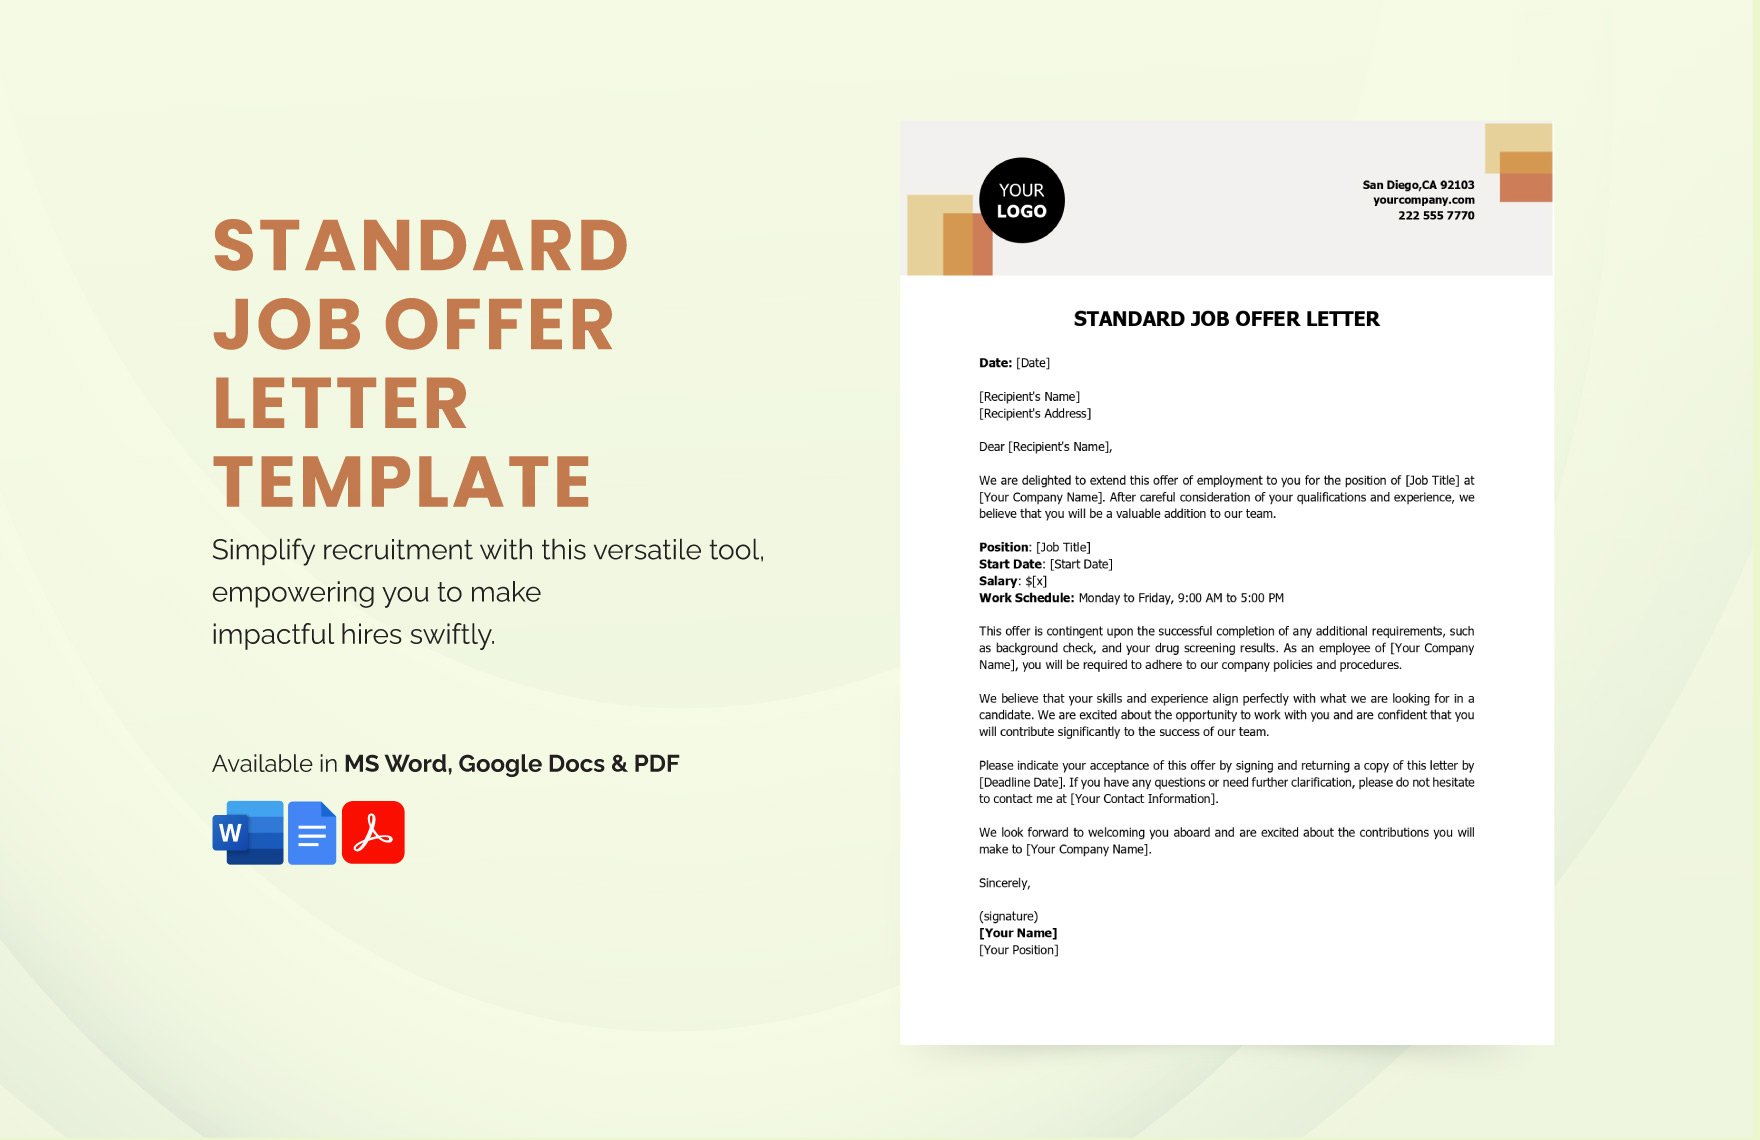 Standard Job Offer Letter Template in Word, Google Docs, PDF